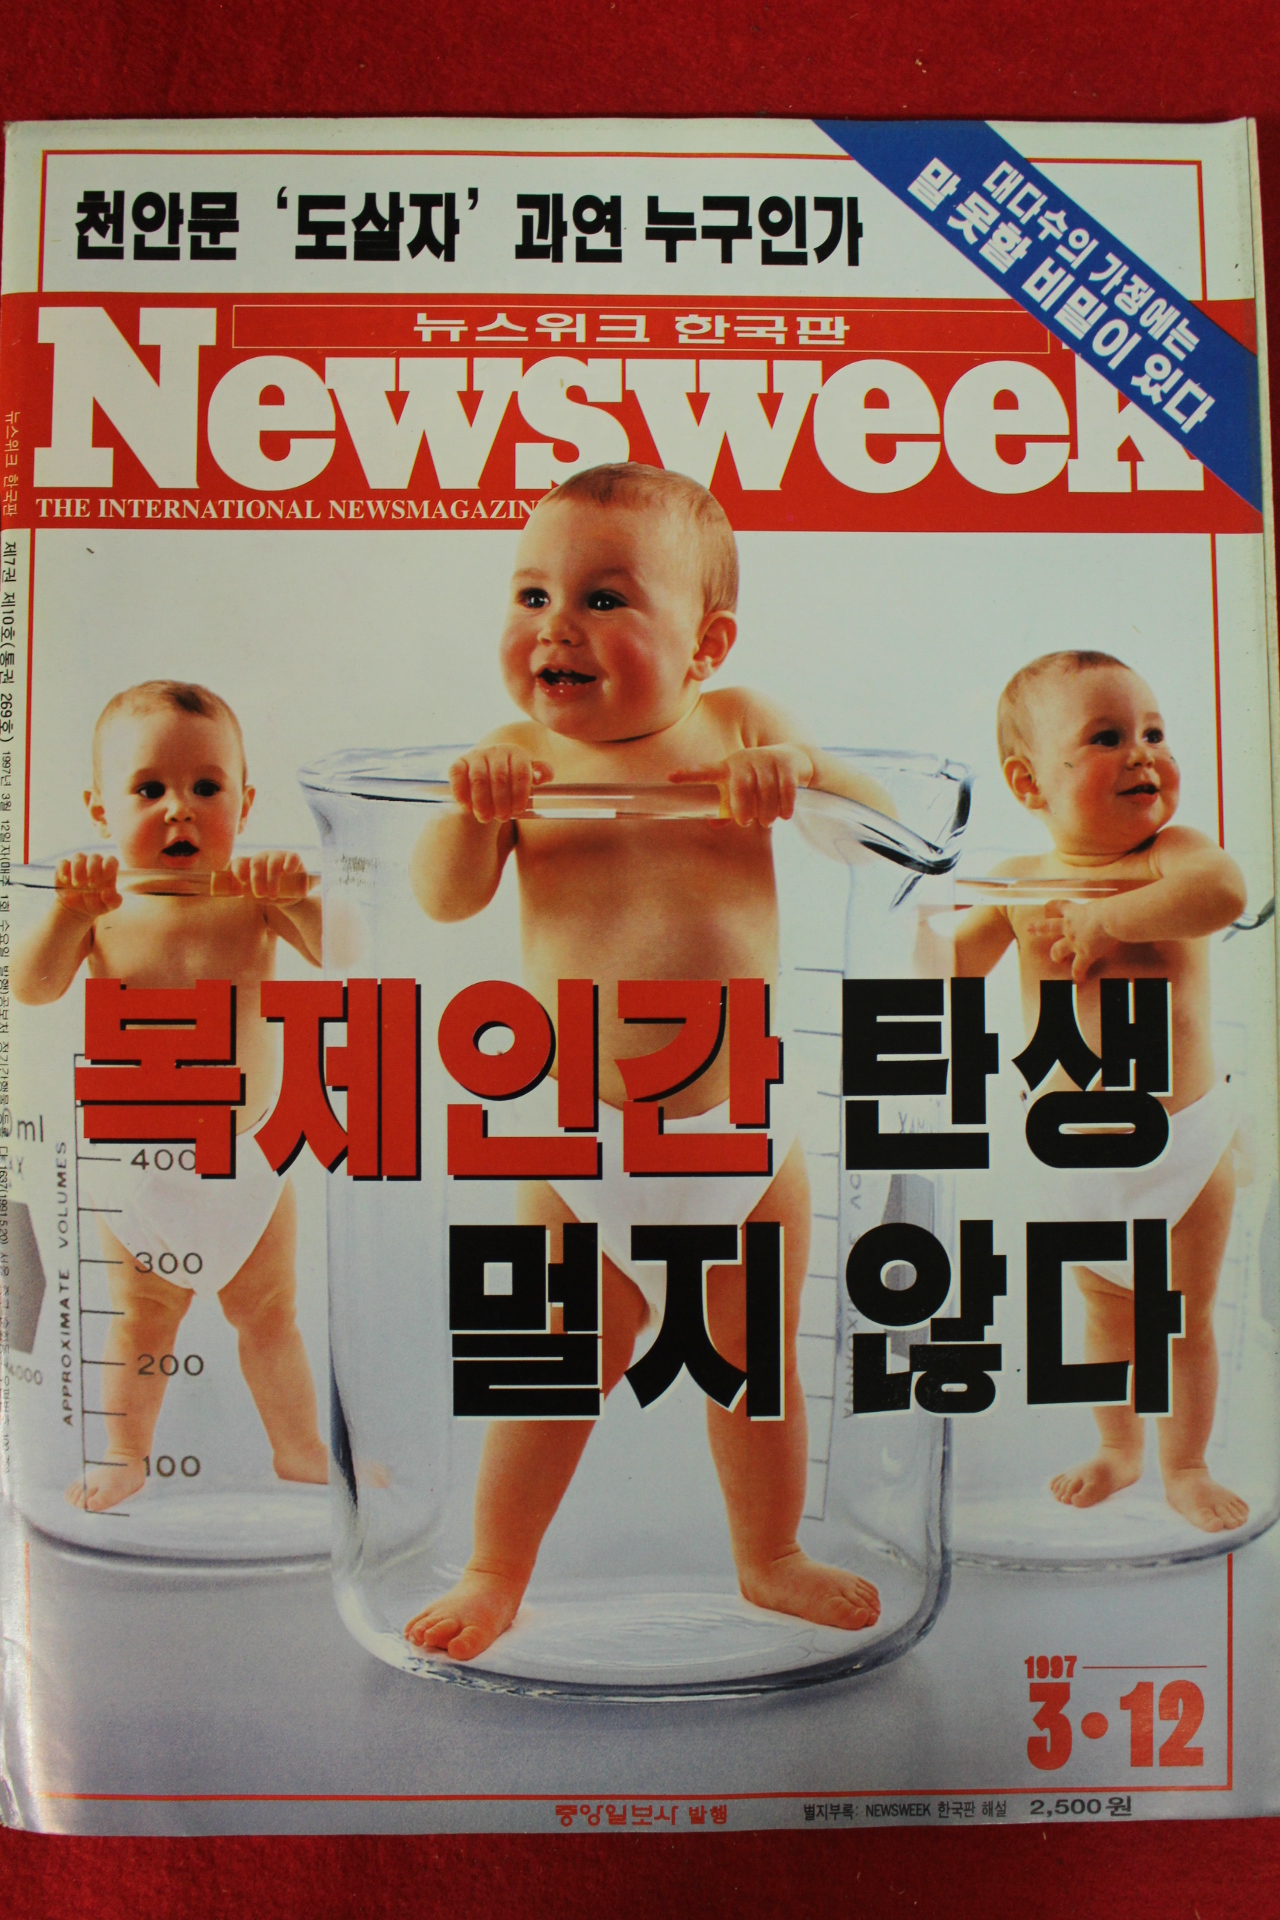 1997년 뉴스위크 3월12일자